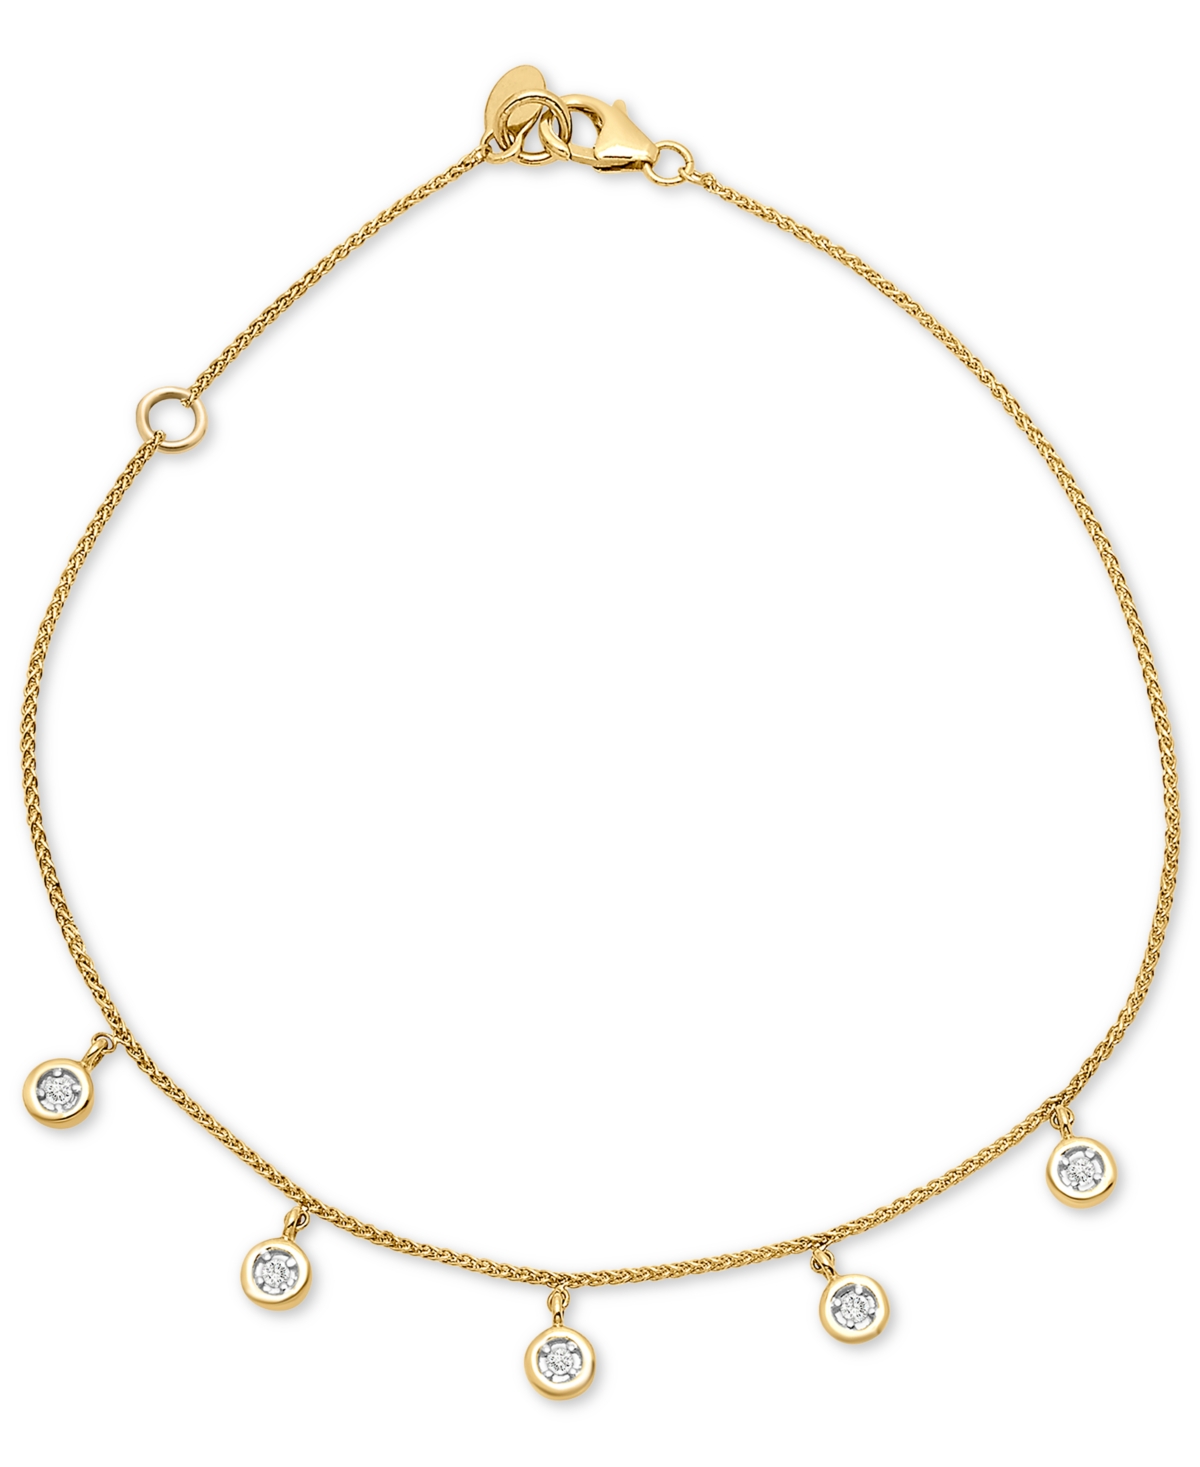 Diamond Dangling Bezel Ankle Bracelet (1/10 ct. t.w.) in 10k Gold, Created for Macy's - Yellow Gold